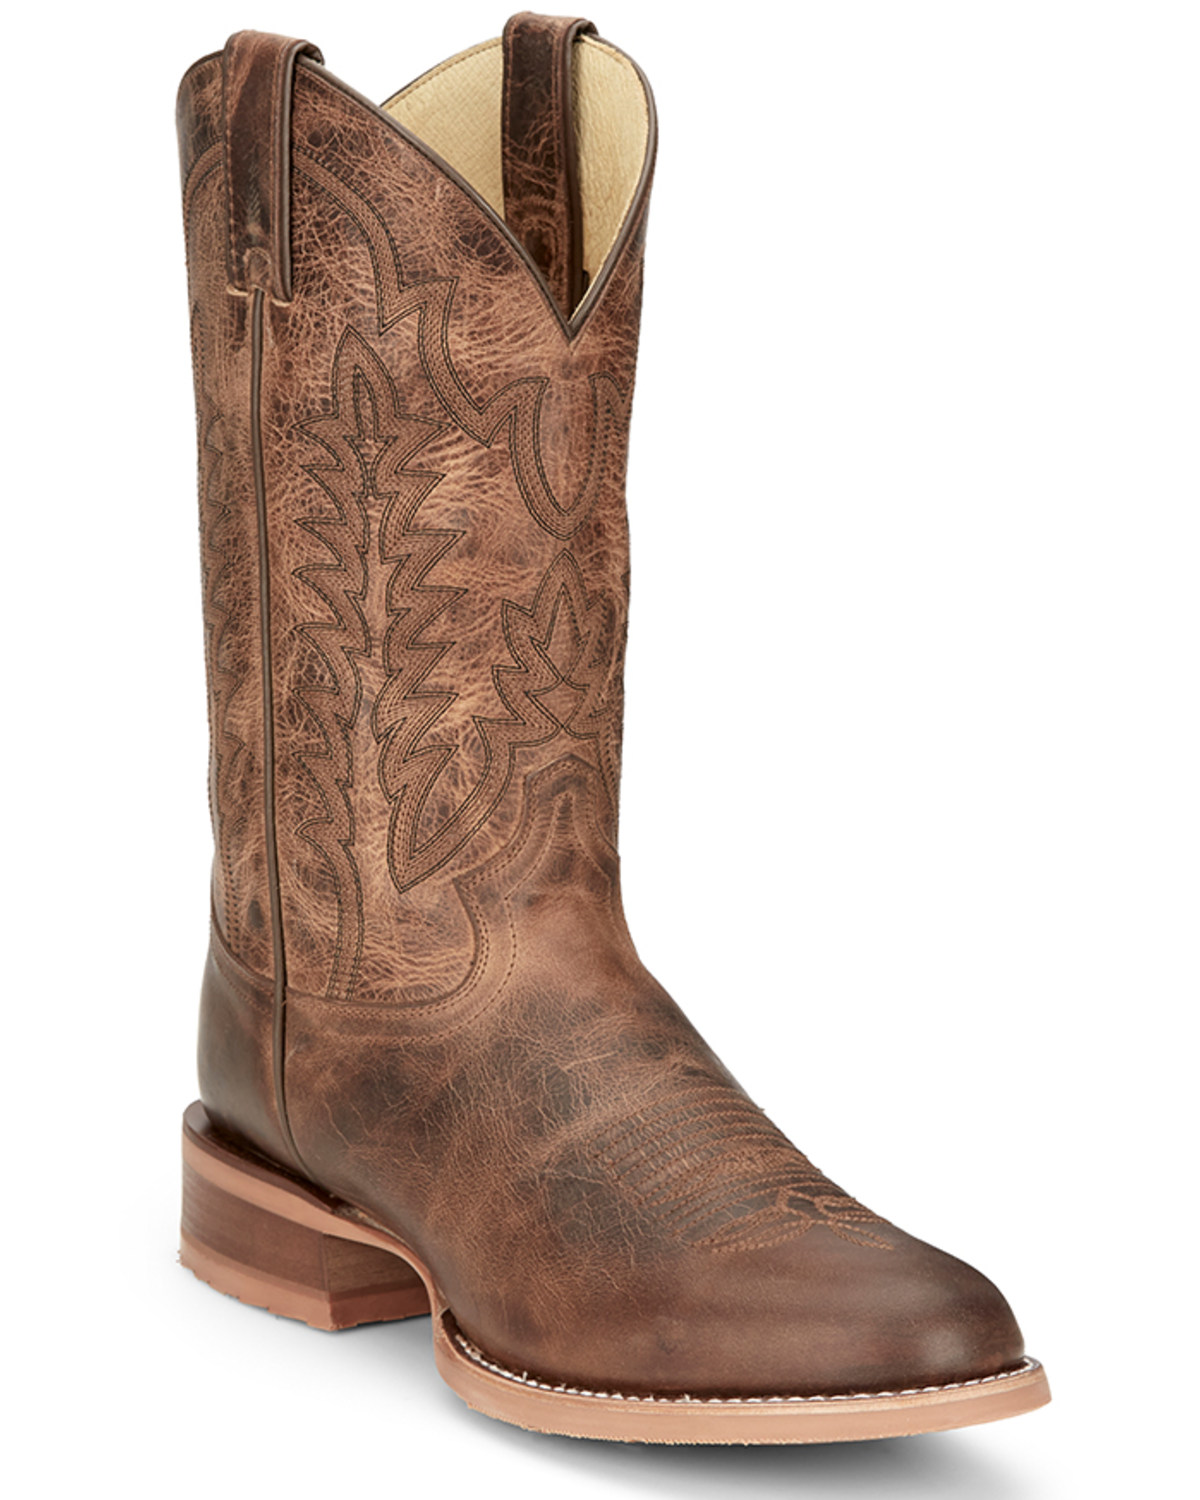 Justin Men's Clanton Western Boots - Round Toe